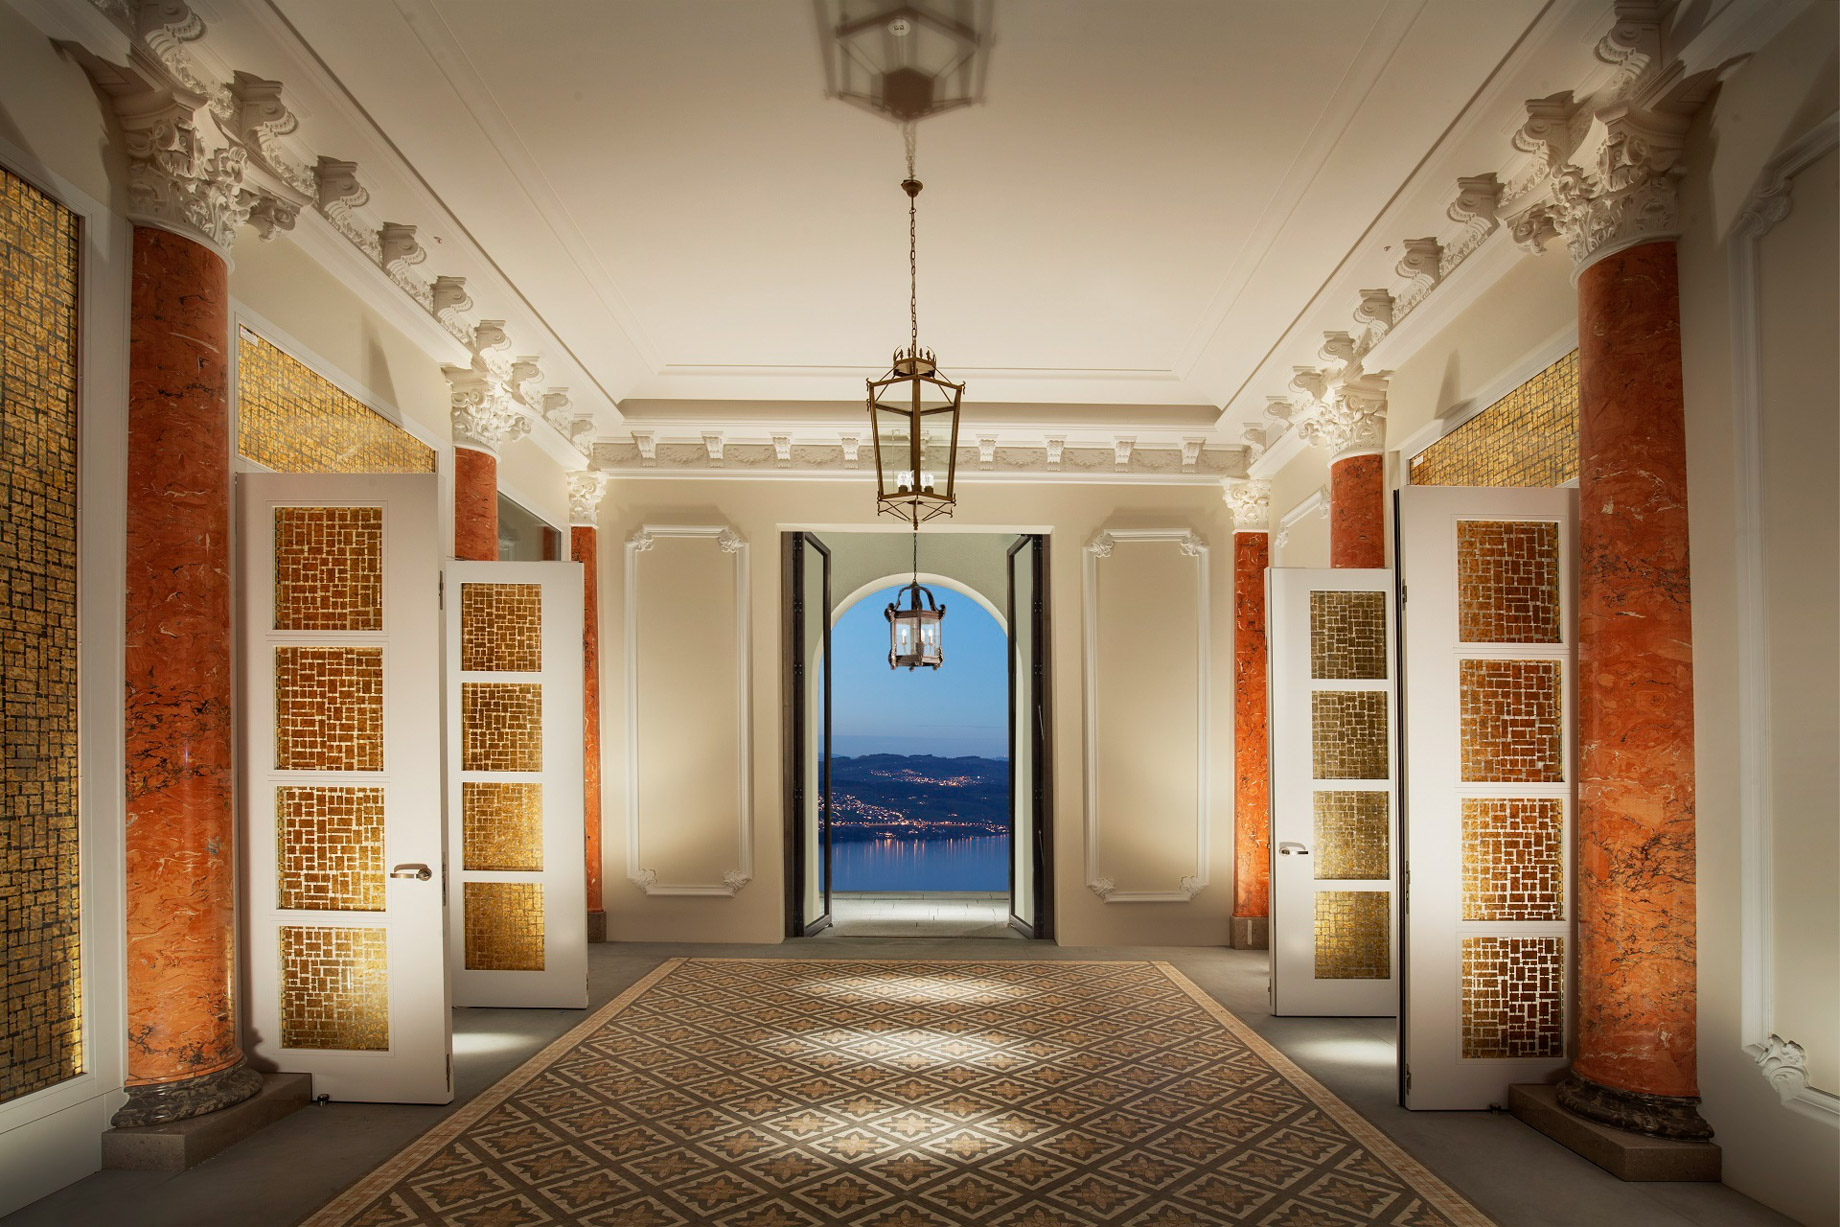 Palace Hotel - Burgenstock Hotels & Resort - Obburgen, Switzerland - Hotel Lobby Night Lakeview